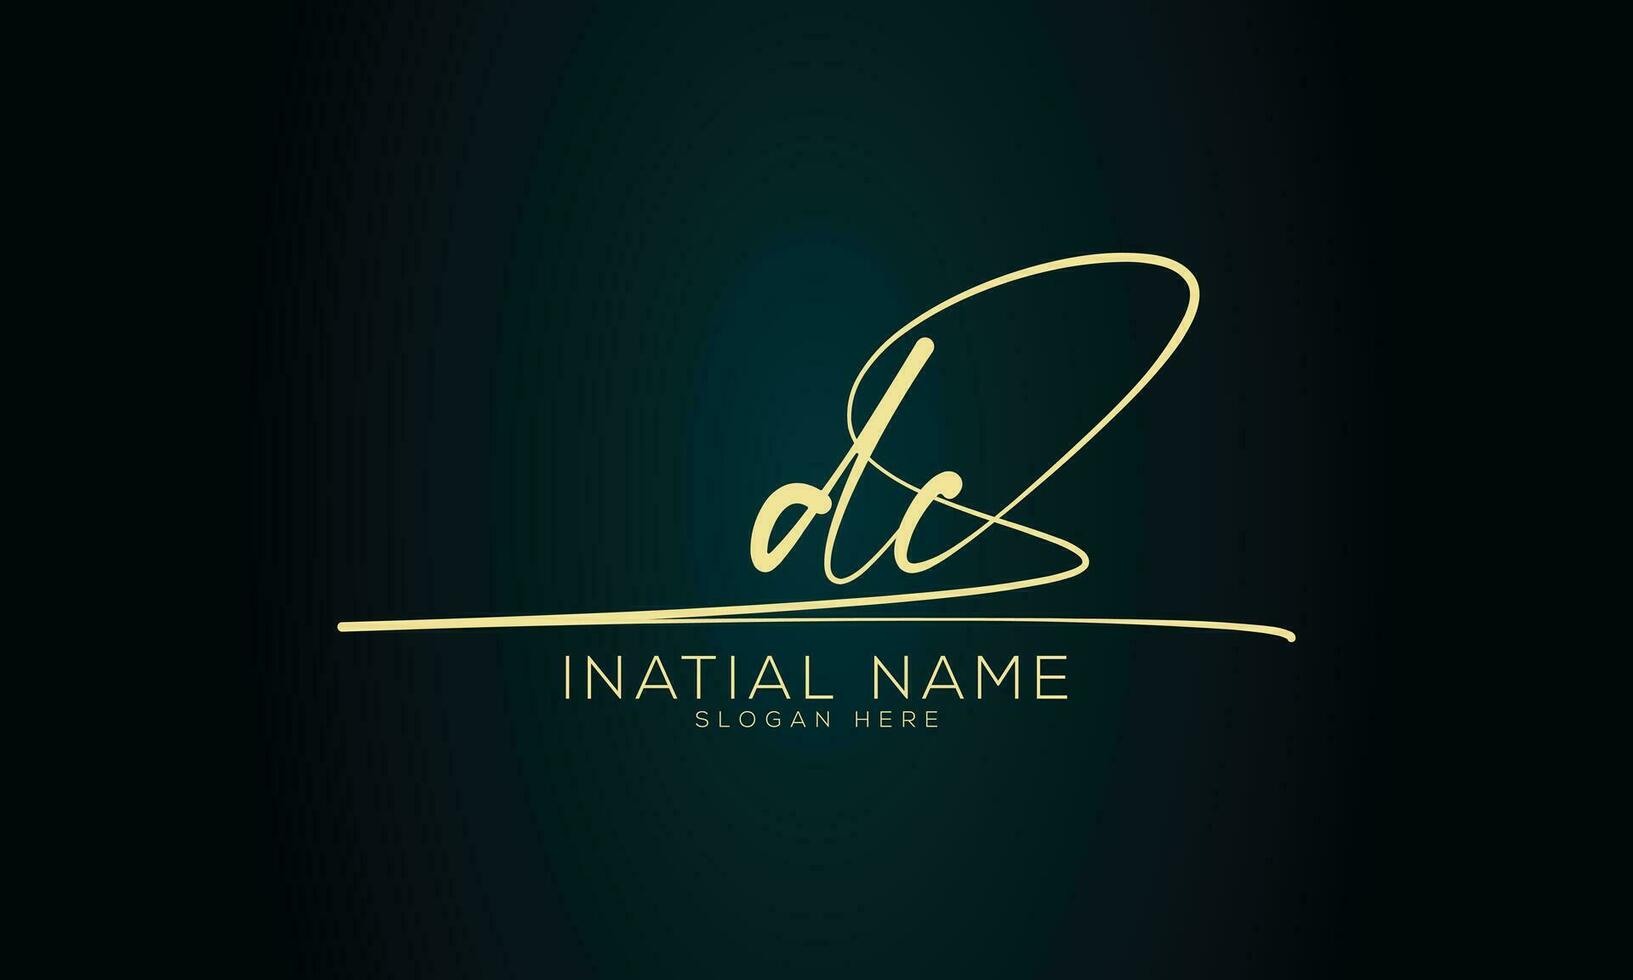 Dc initial handwriting signature logo design vector